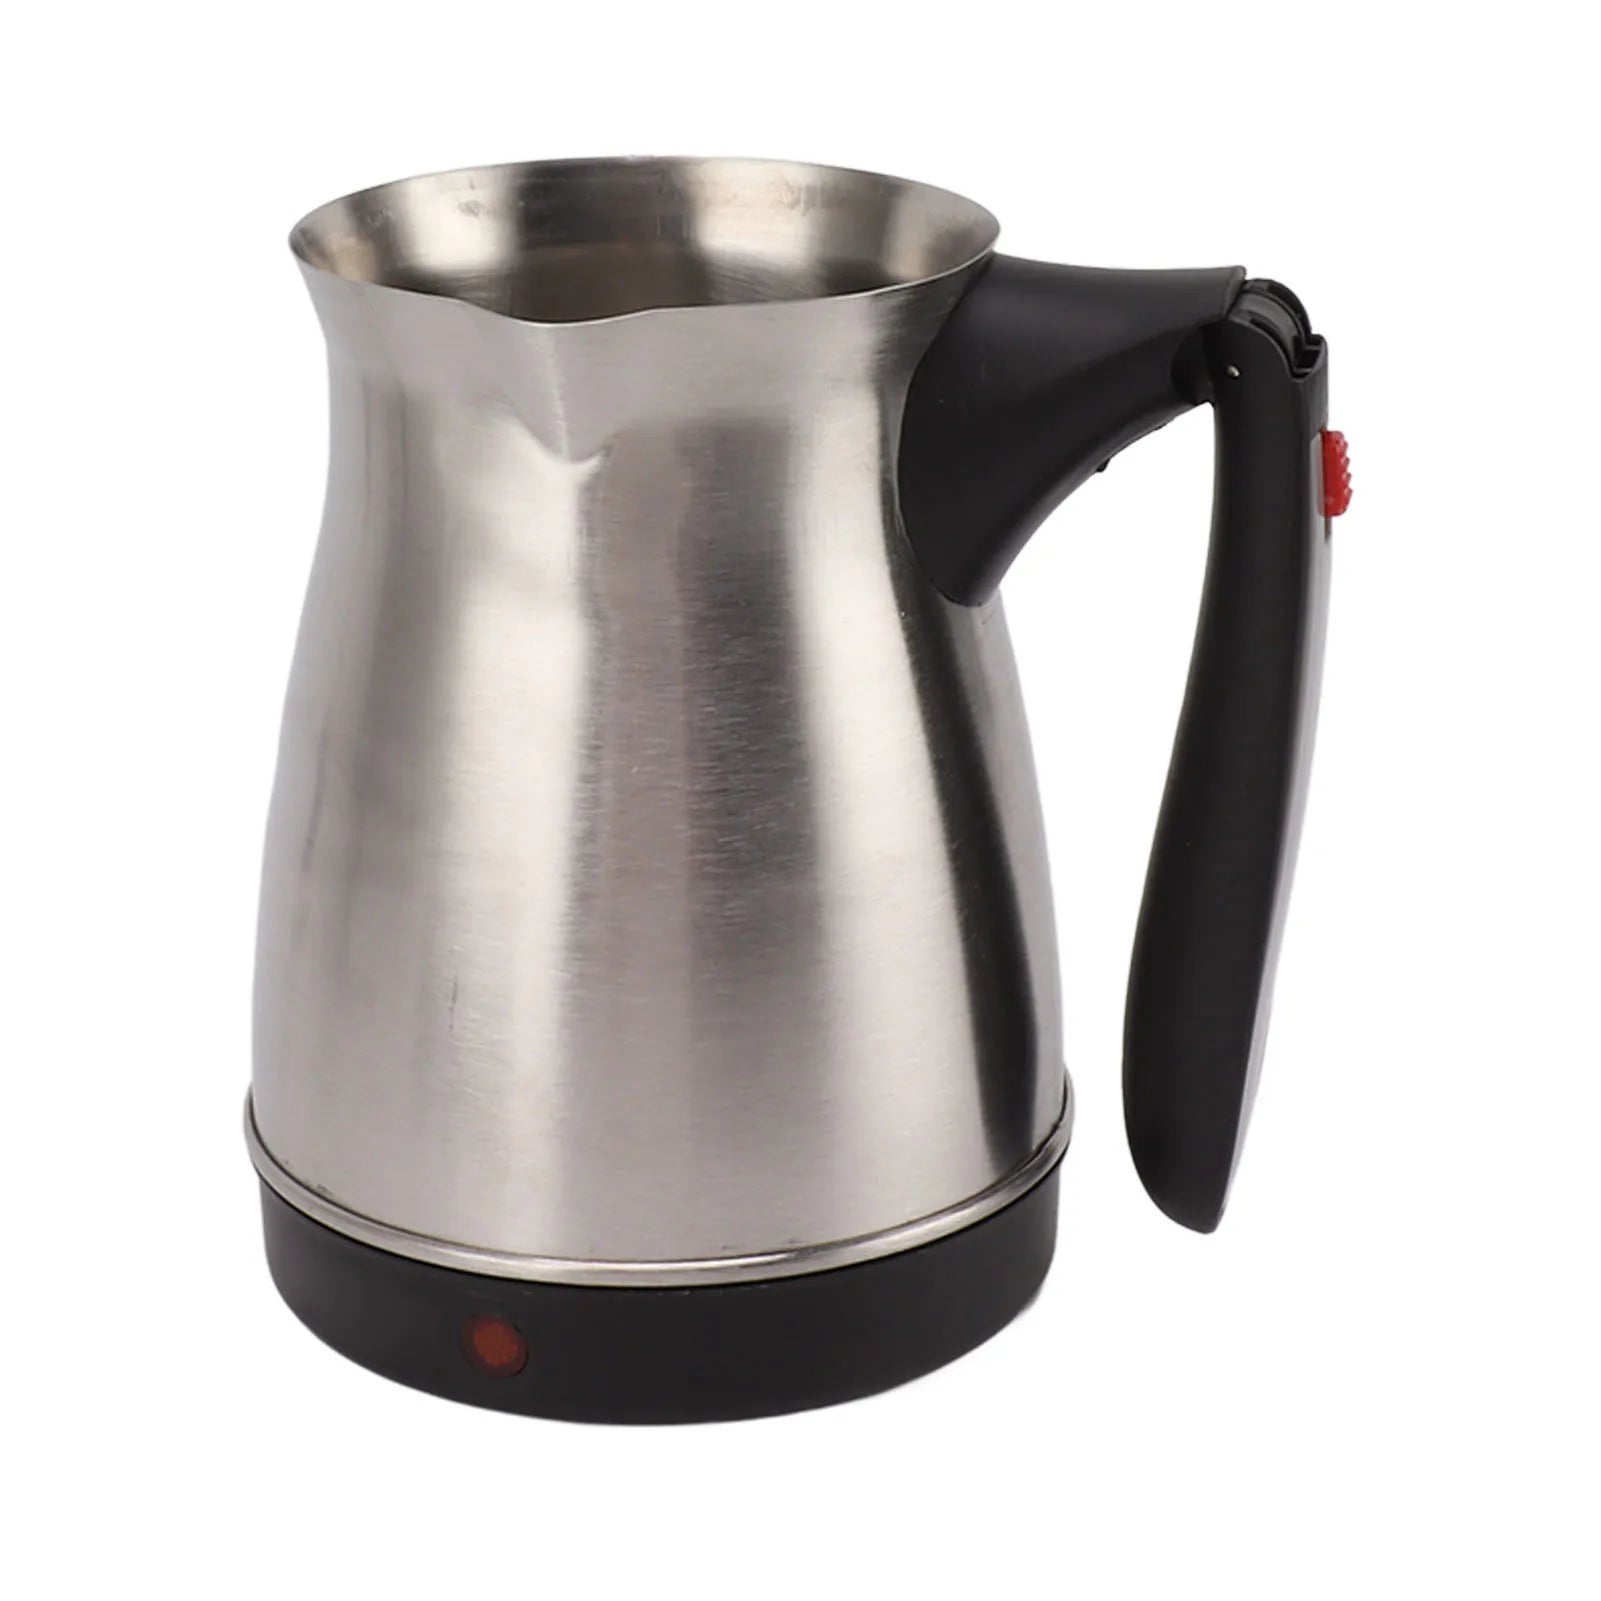 "Turkish coffee maker machine" "Foldable handle coffee pot" "Electric water kettle teapot"